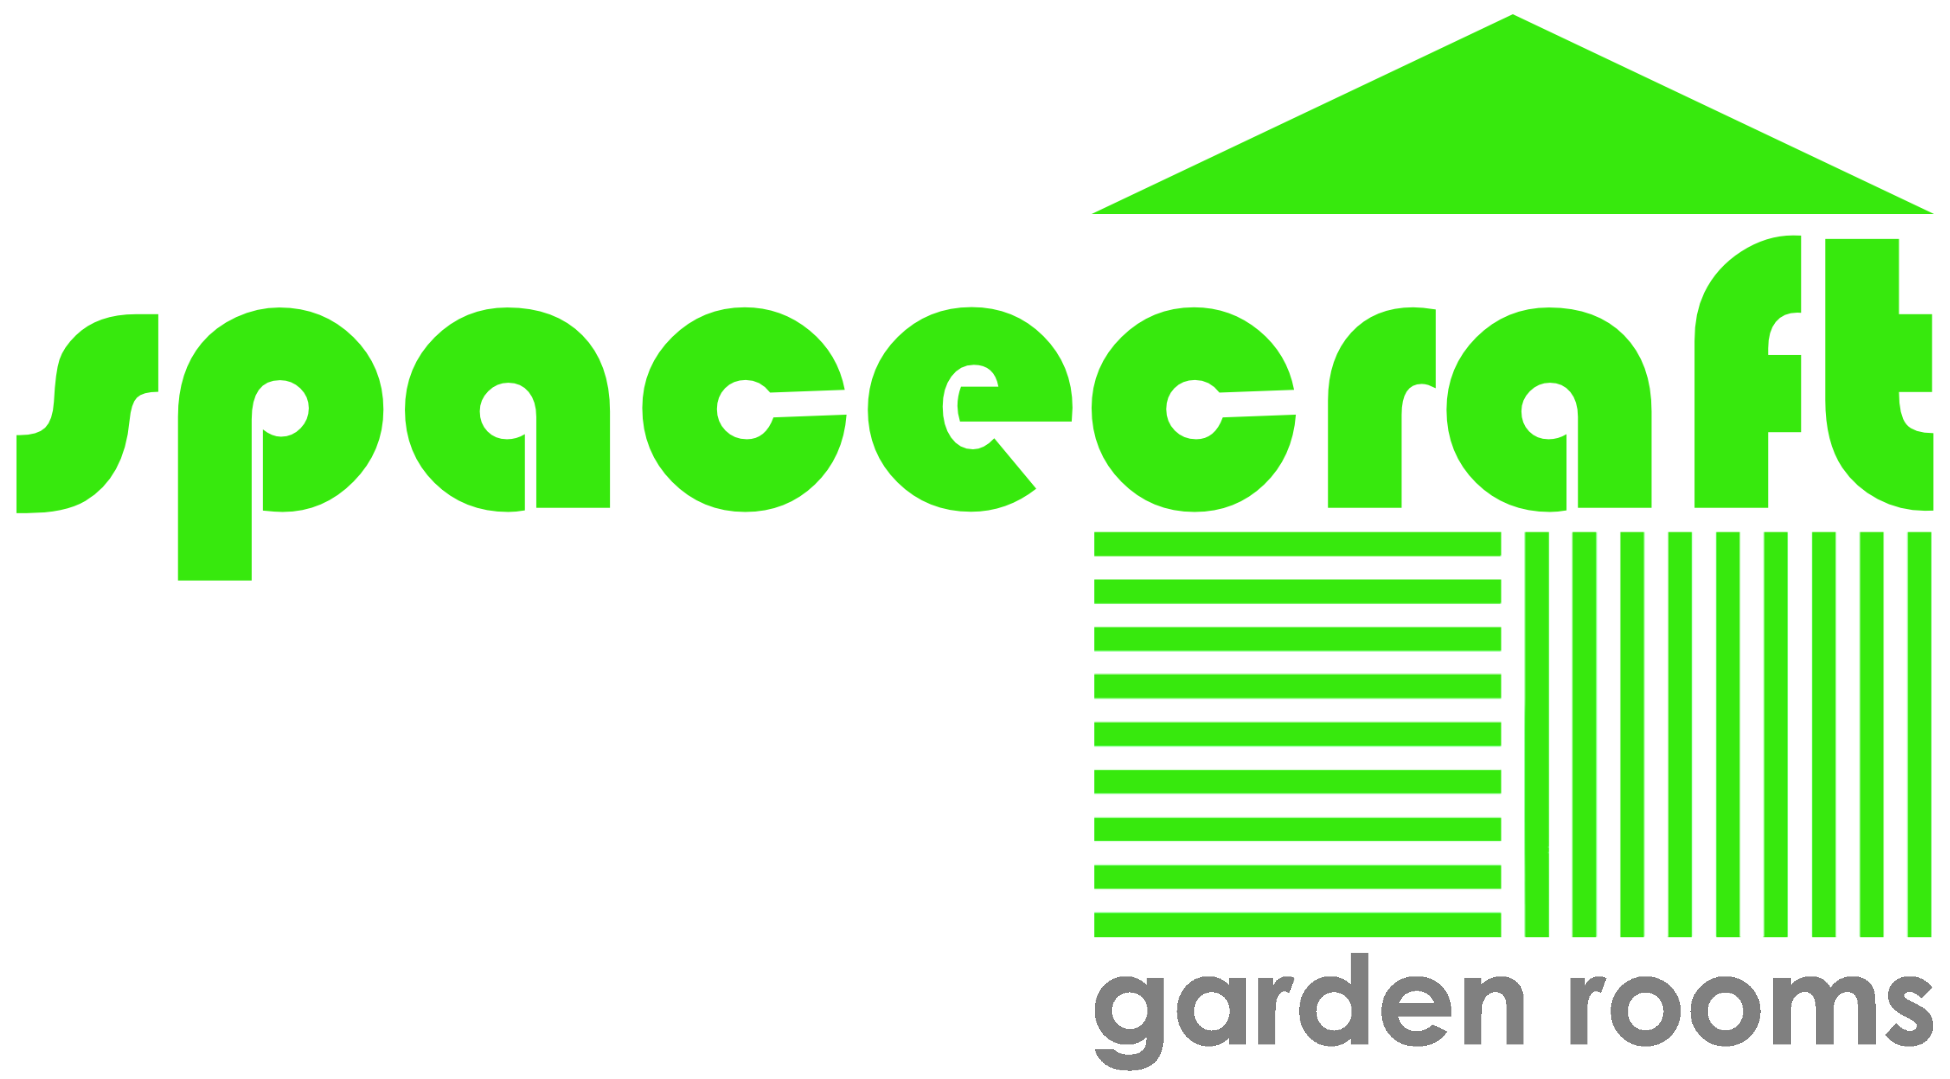 Spacecraft Garden Rooms Ltd